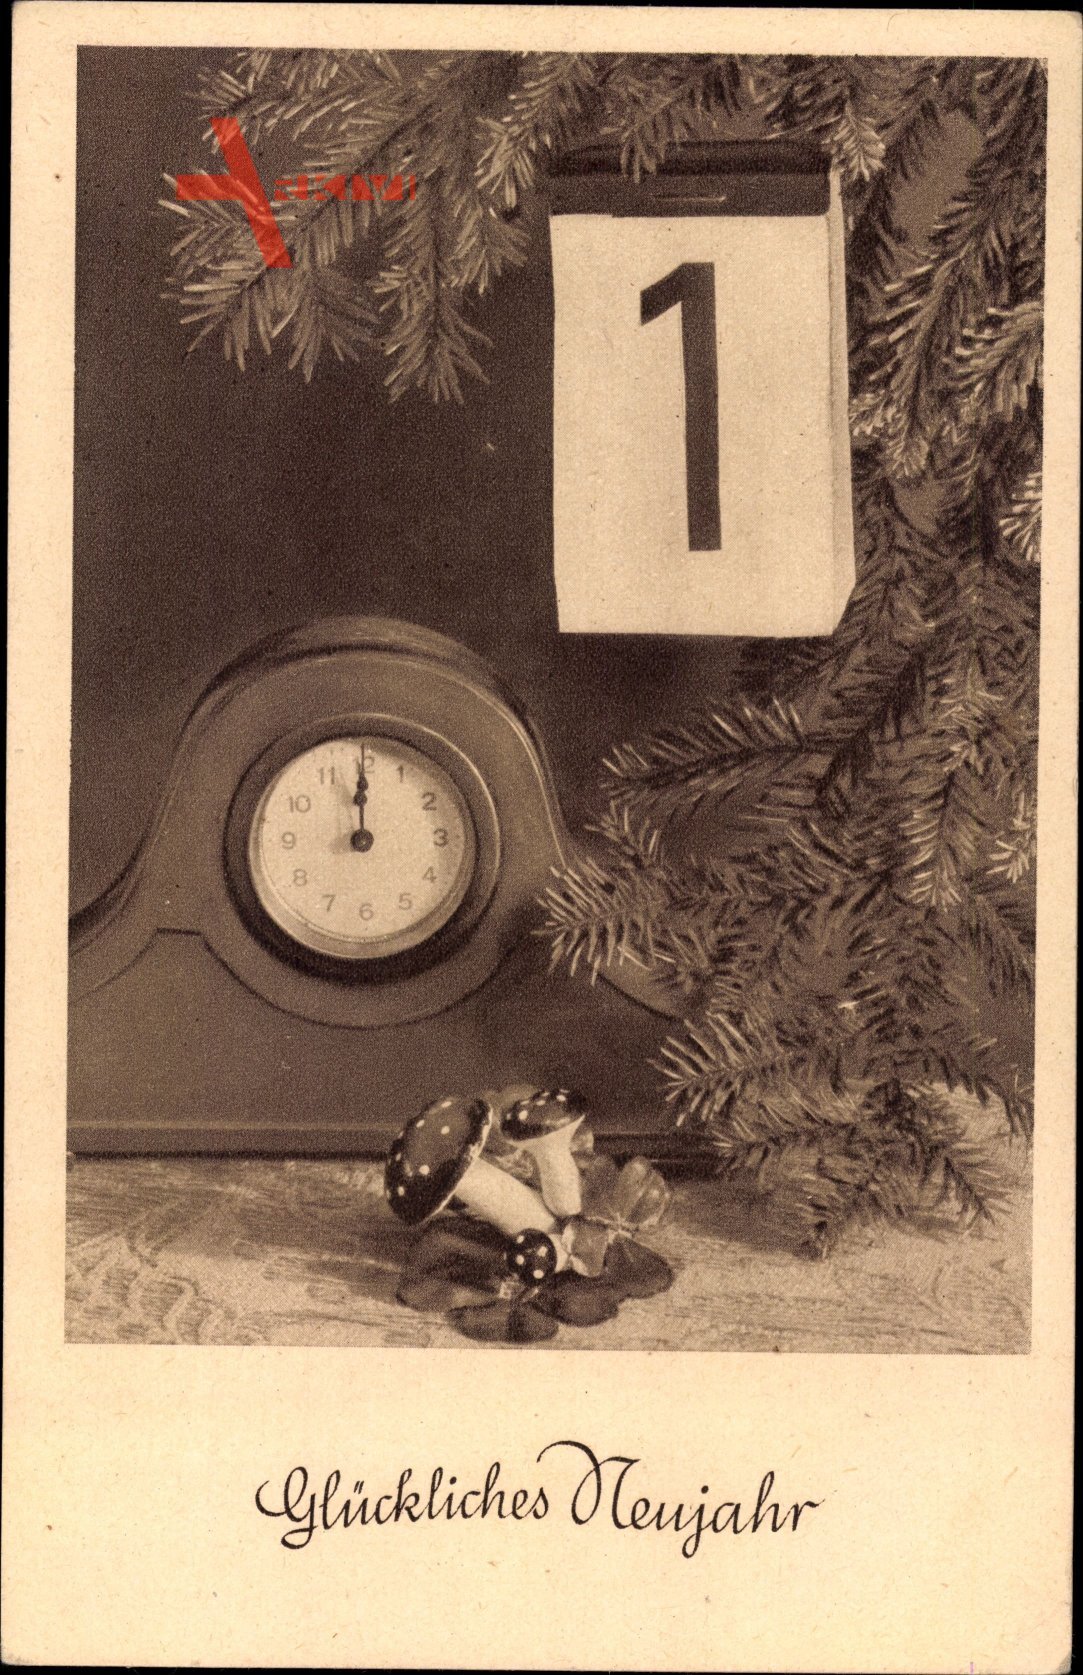 Glückwunsch Neujahr, Uhr, Kalenderblatt, Fliegenpilze, Kleeblätter